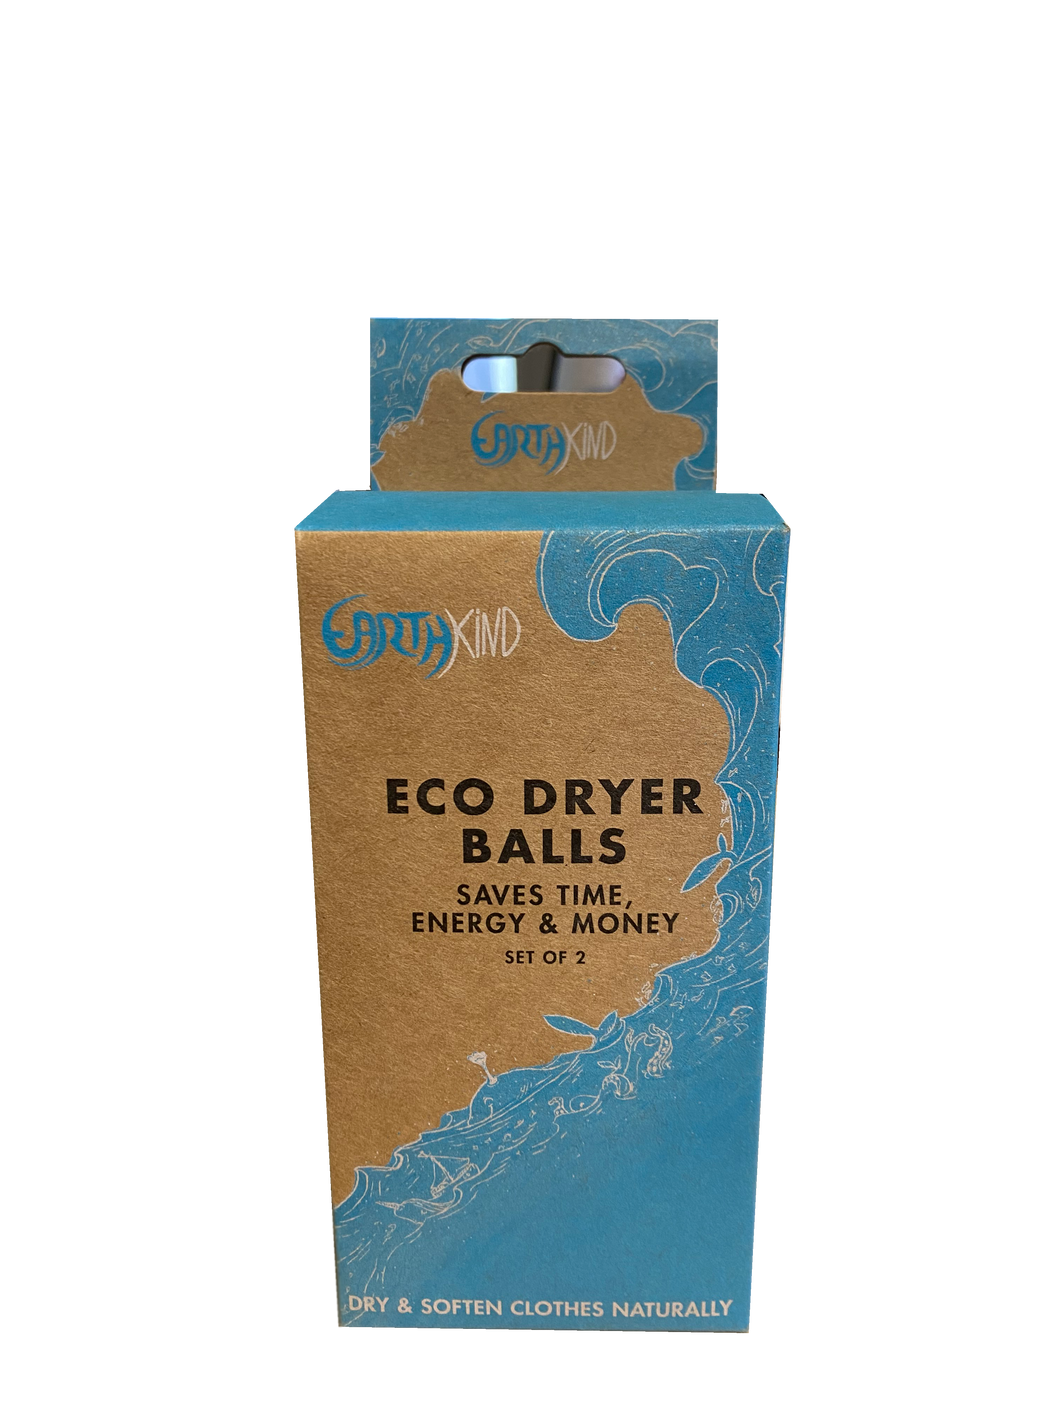 EDDINGTONS <BR>
Eco Dryer Balls <BR>